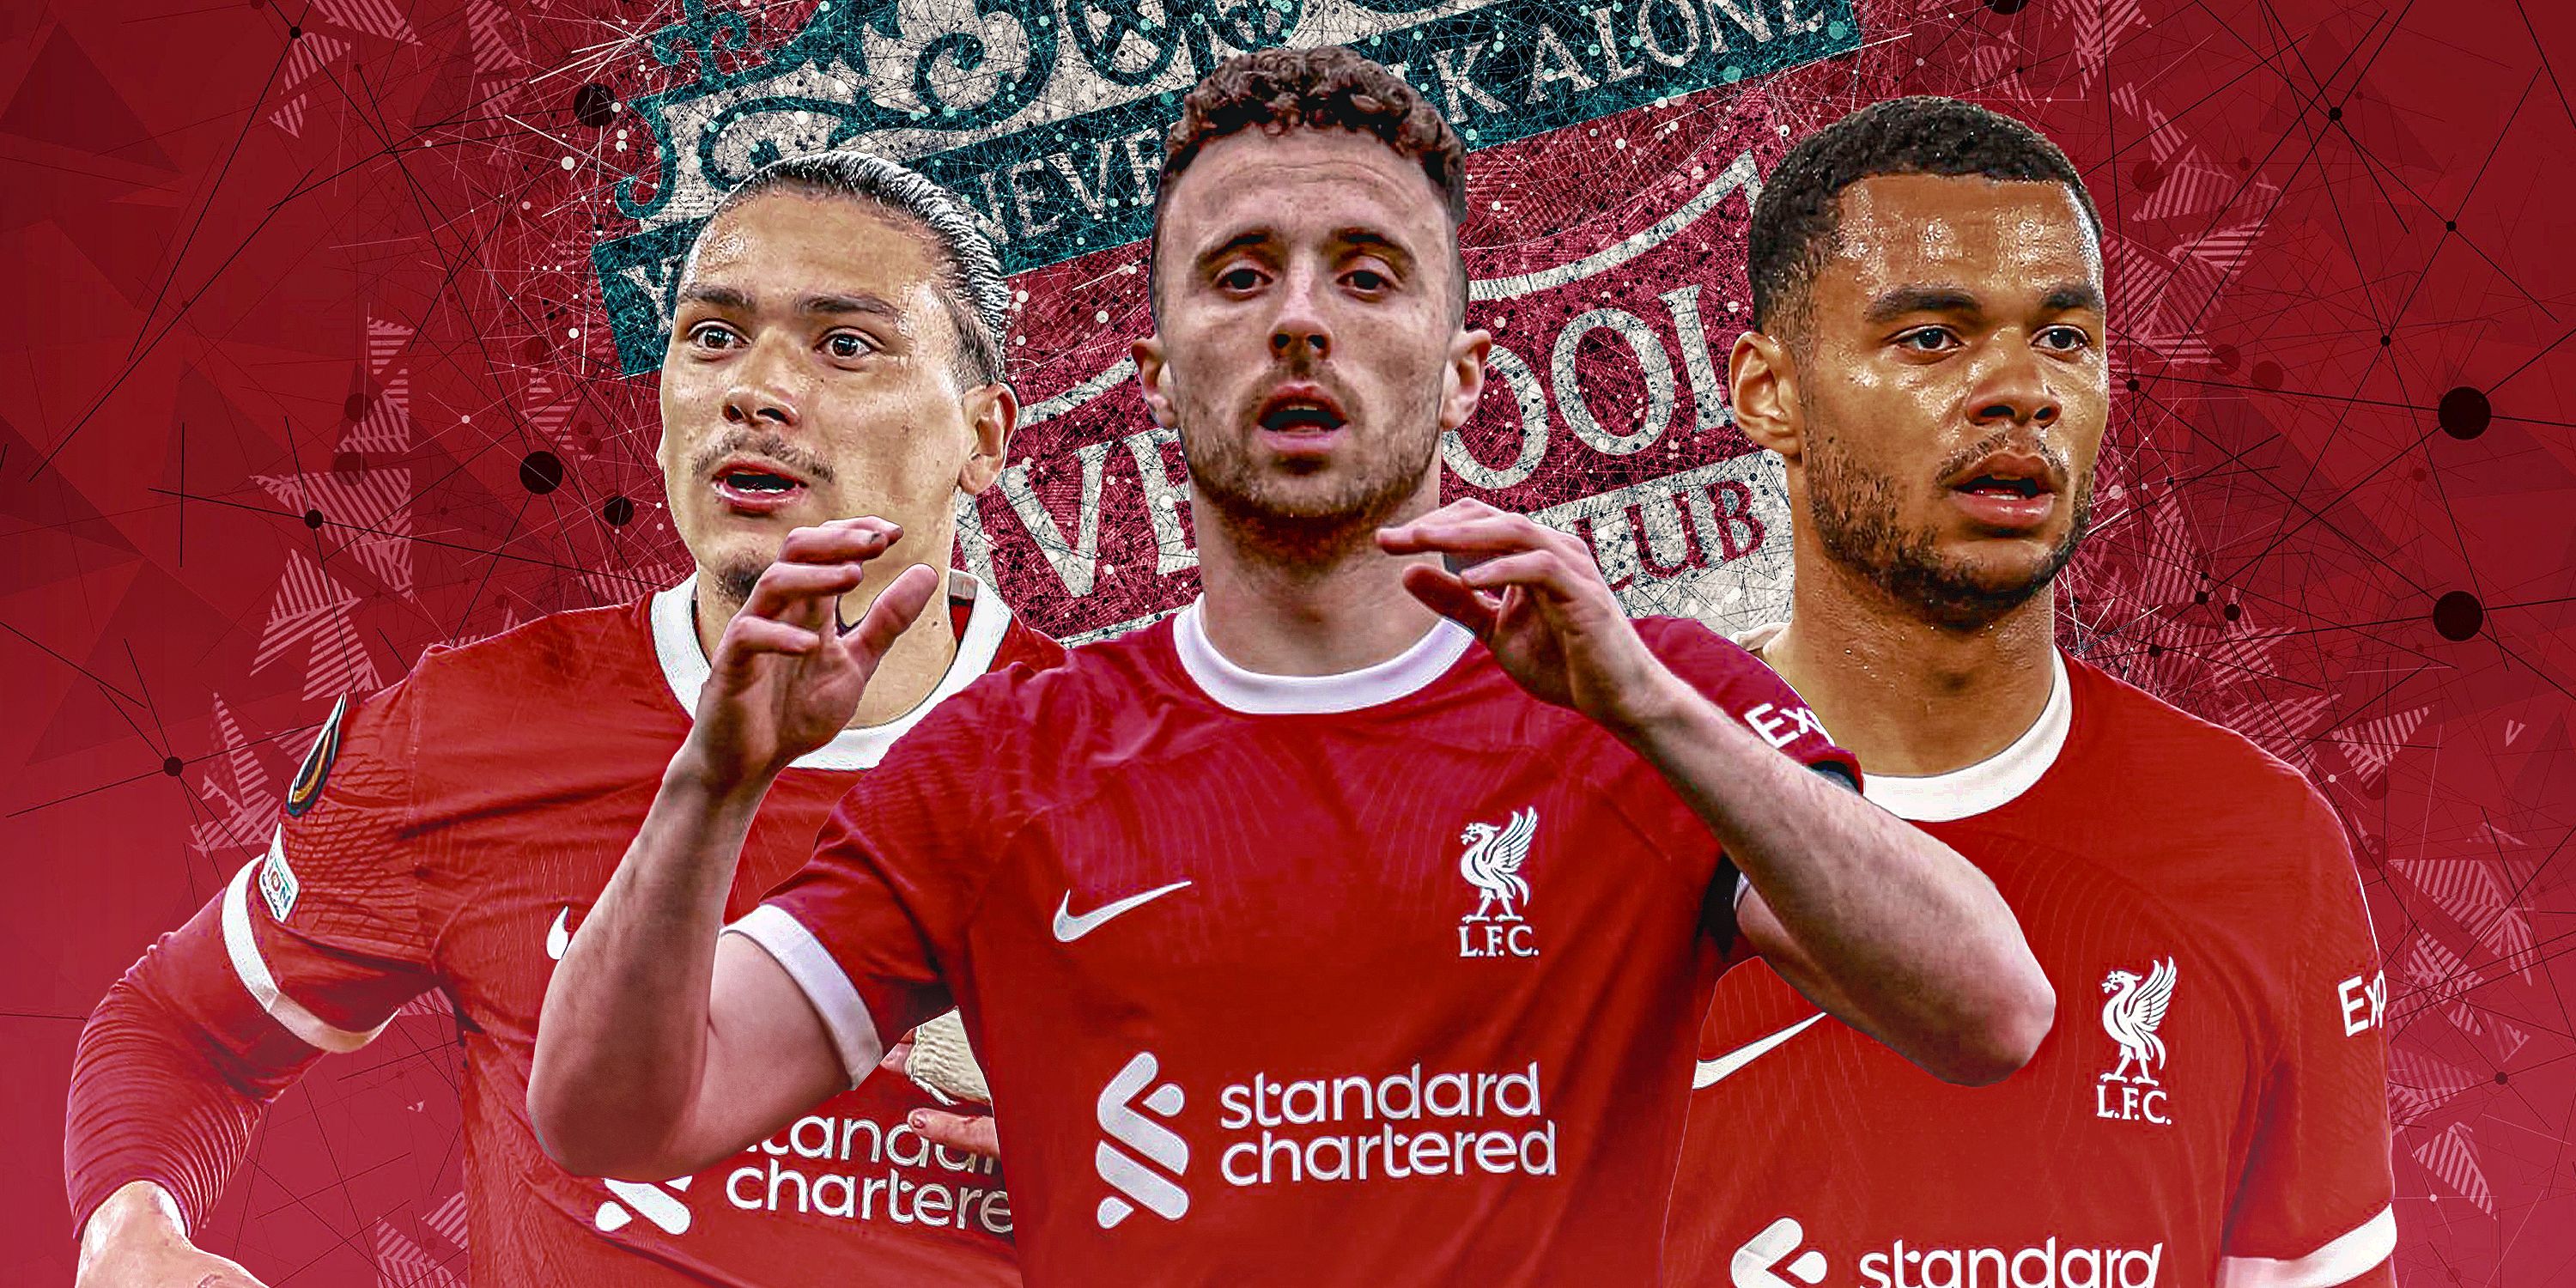 Cody Gakpo, Darwin Nunez,  Diogo Jota in Liverpool kit this season with Liverpool theme